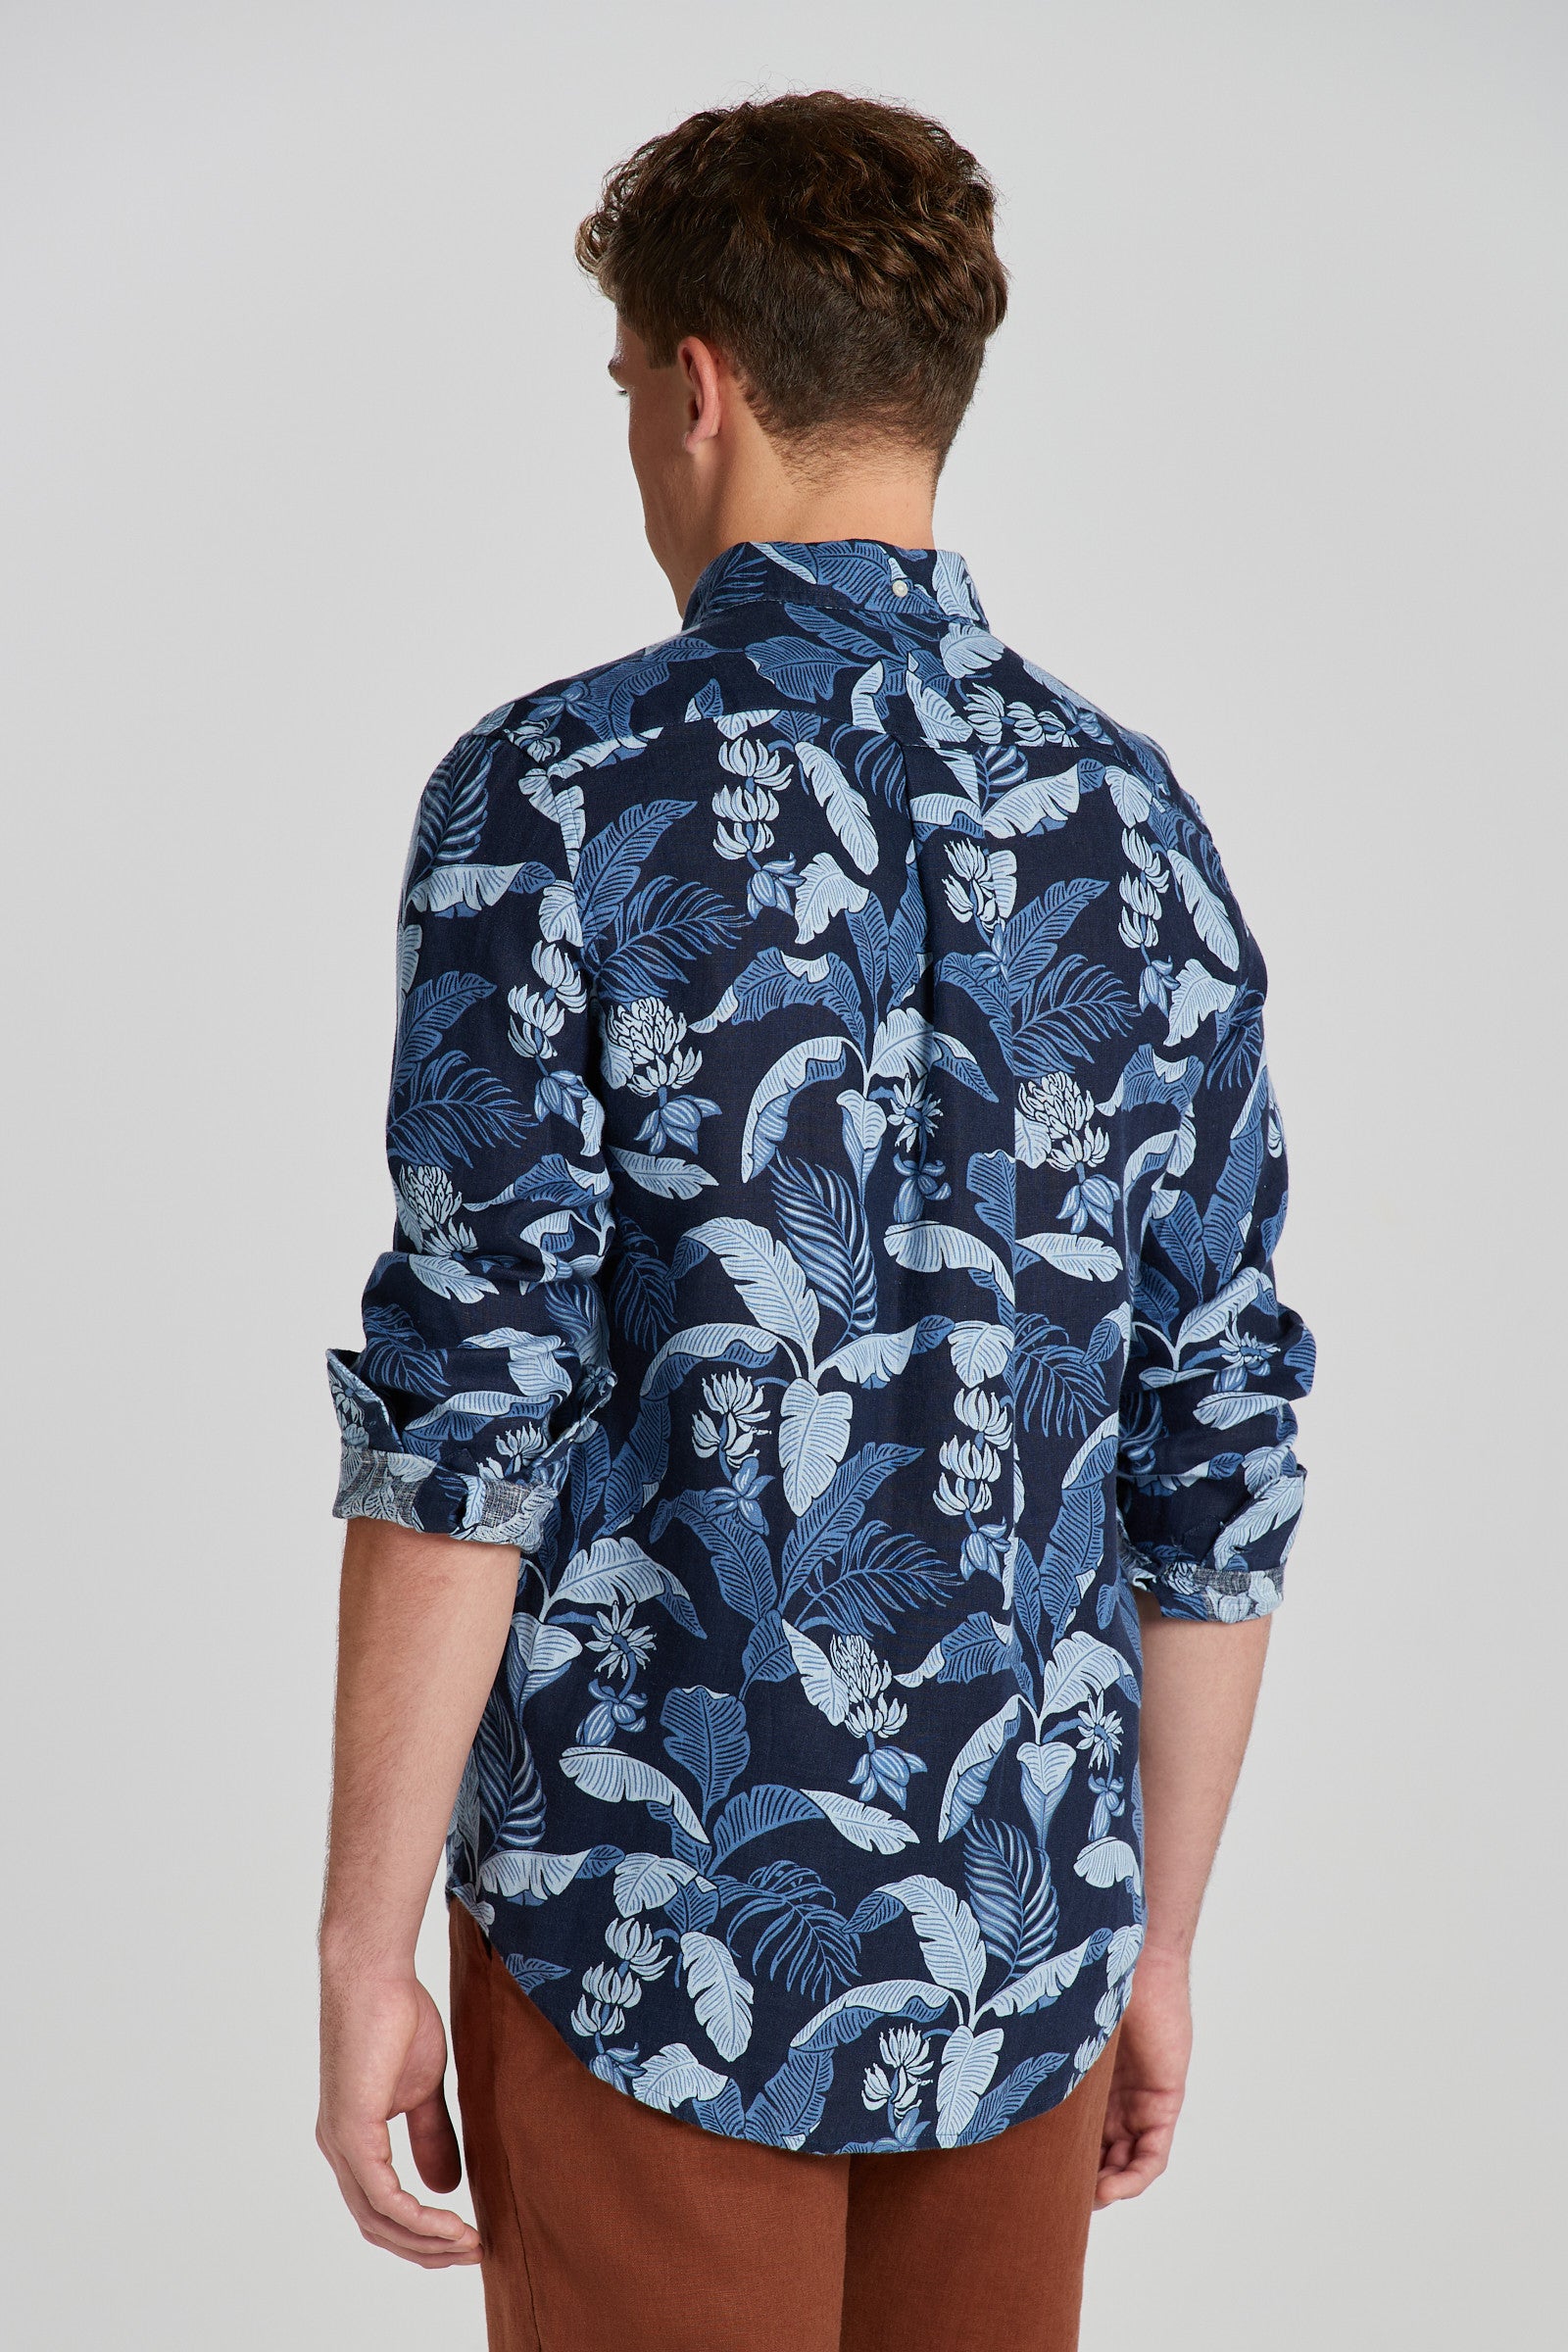 GANT - Regular Fit Printed Linen Shirt in Marine Blue 3240078 410